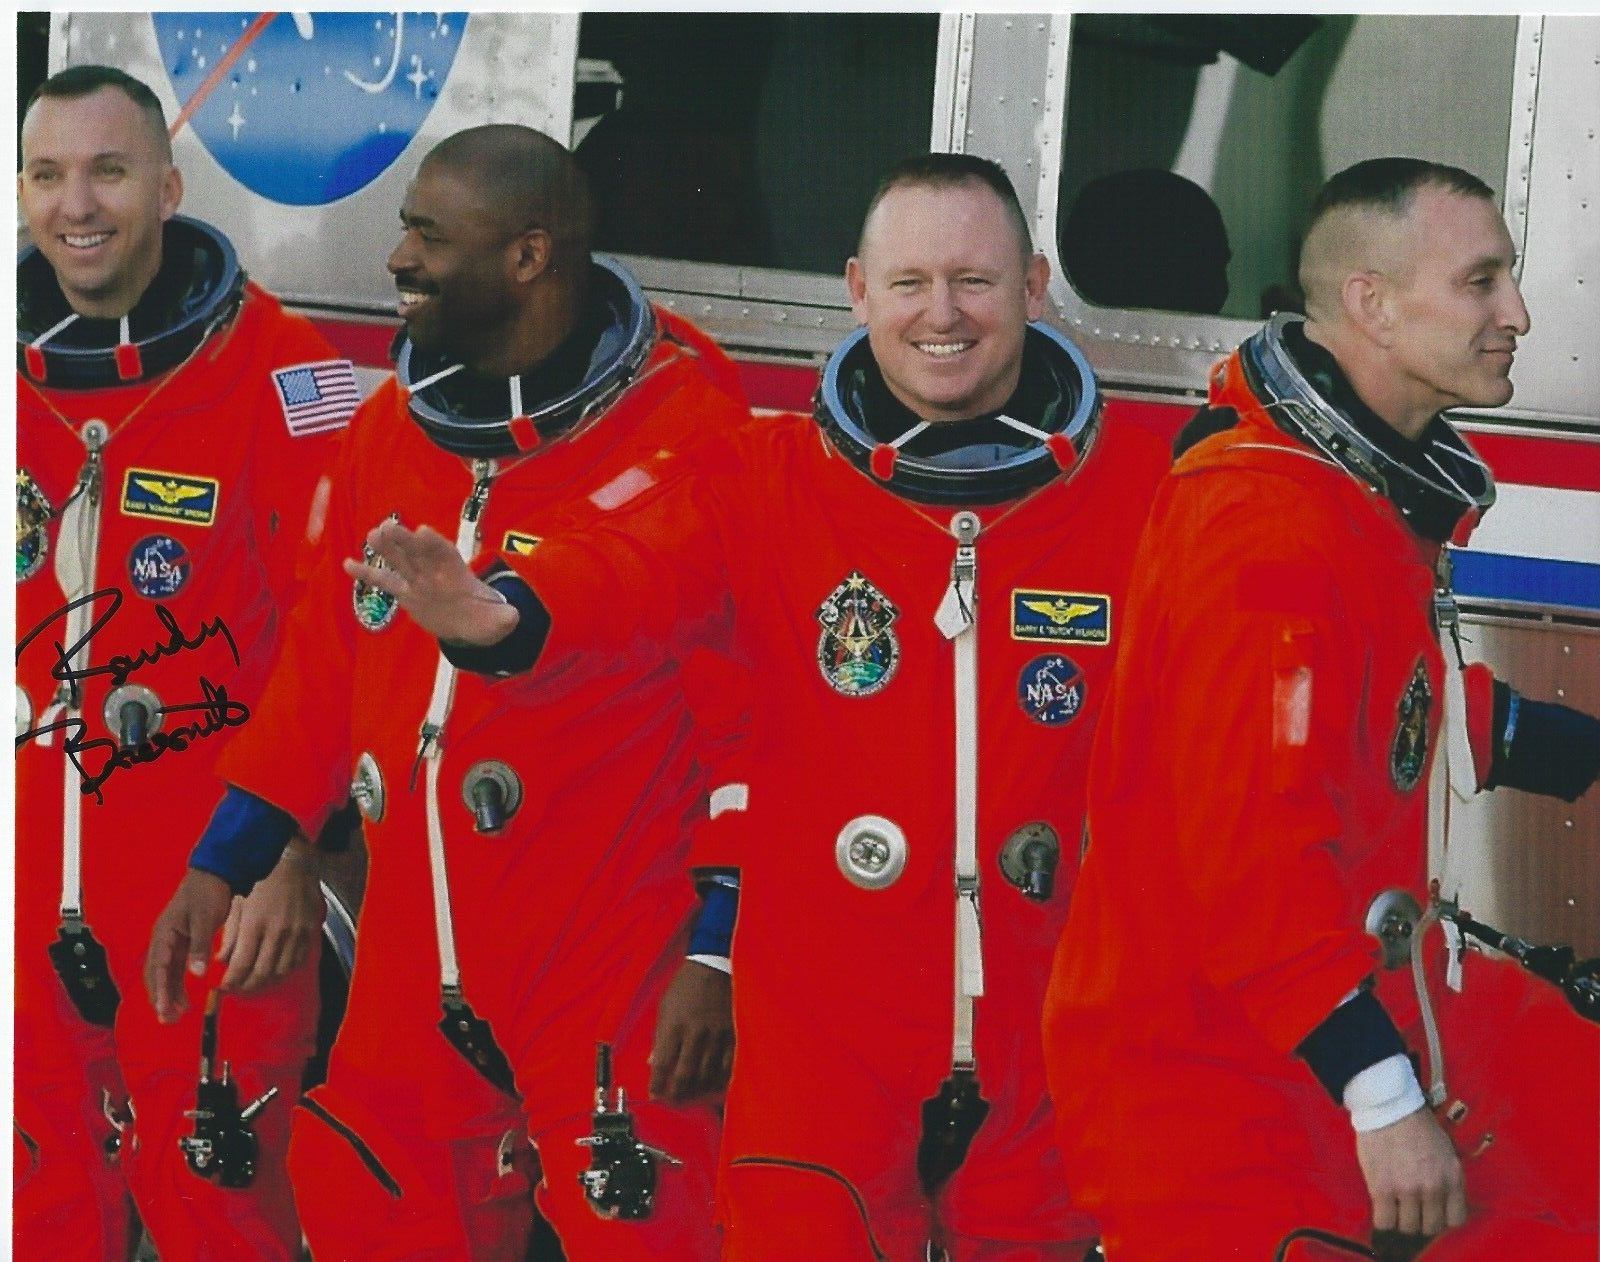 RANDOLPH Randy BRESNIK NASA Astronaut U.S. Marines Signed REPRINT 8.5 x 11 Photo